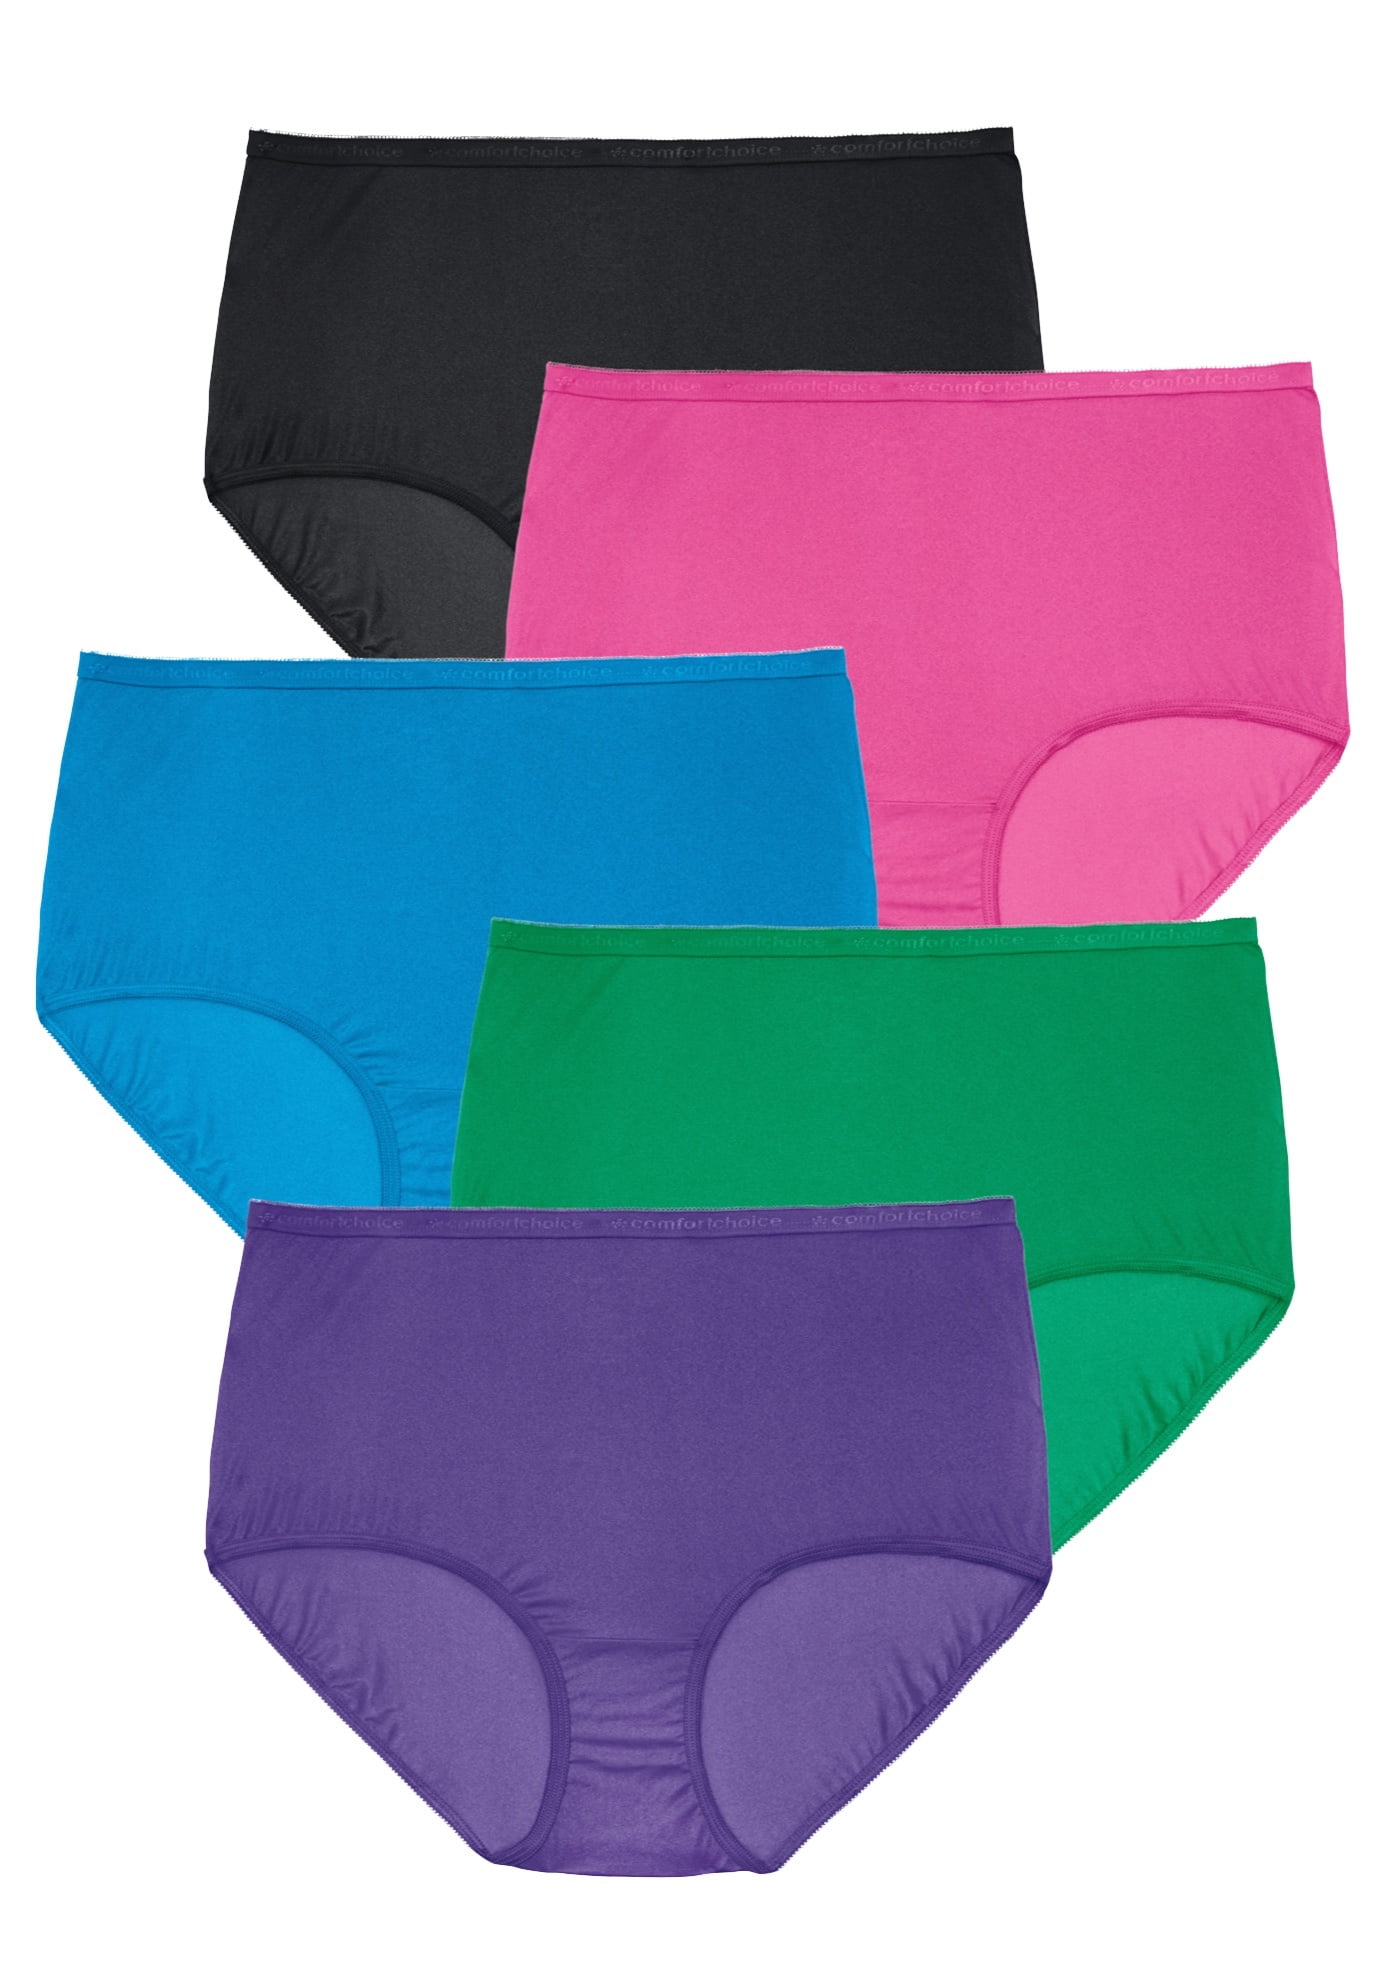 COMFORT CHOICE WOMENS Plus Size 13 Nylon Brief Panties Underwear Pastel 5  Pair $26.00 - PicClick